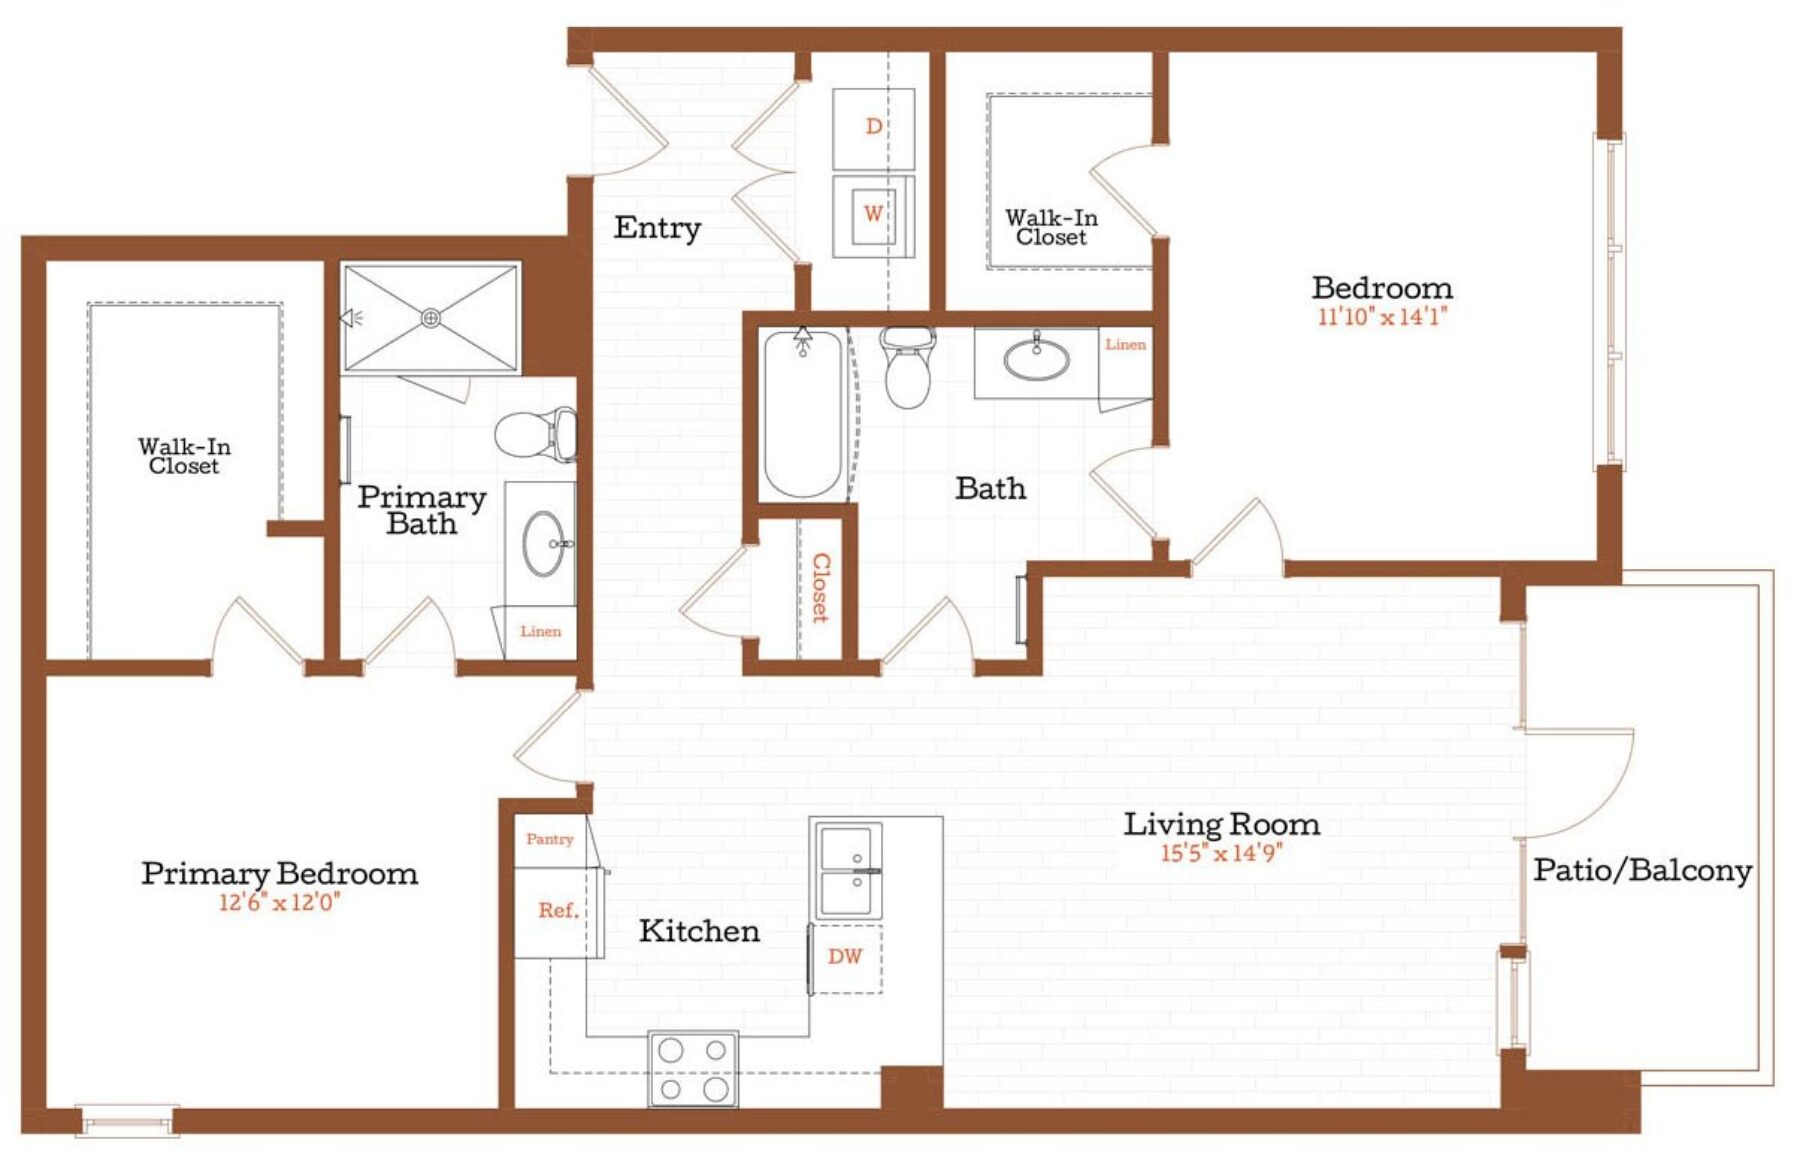 Plan Image: B6 - 2 Bedroom